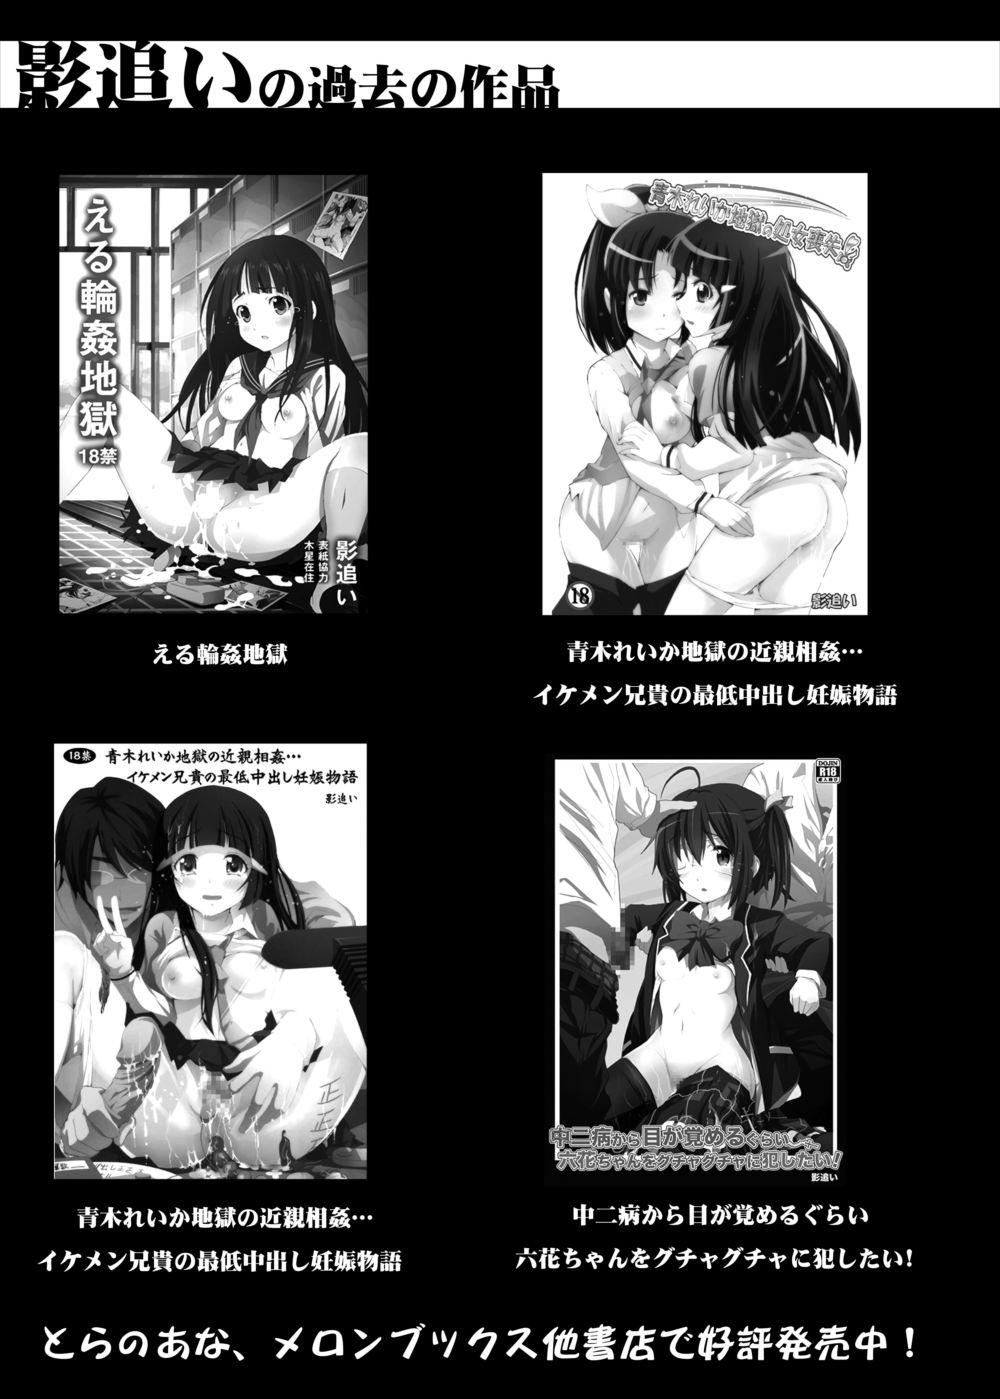 First Asuna to Yui no Jigoku Rape... Ryoujoku Oyakodon Story - Sword art online Thailand - Page 24